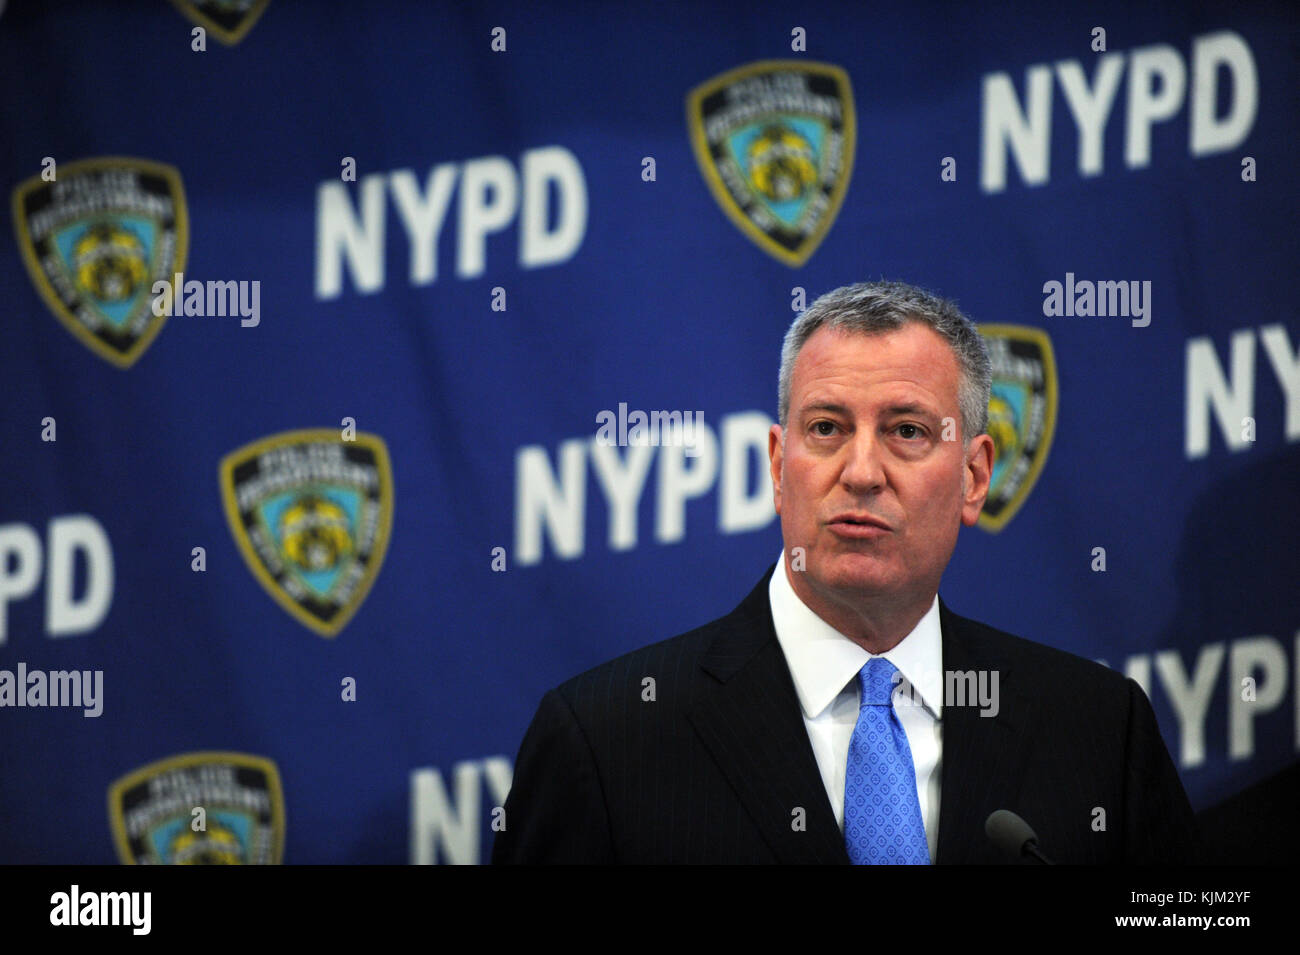 NEW YORK, NY - FEBRUARY 23: New York Mayor Bill de Blasio and Police Commissioner William Bratton announce CompStat 2.0 NYPD HQ on February 23, 2016 in New York City  People:  Bill de Blasio Stock Photo